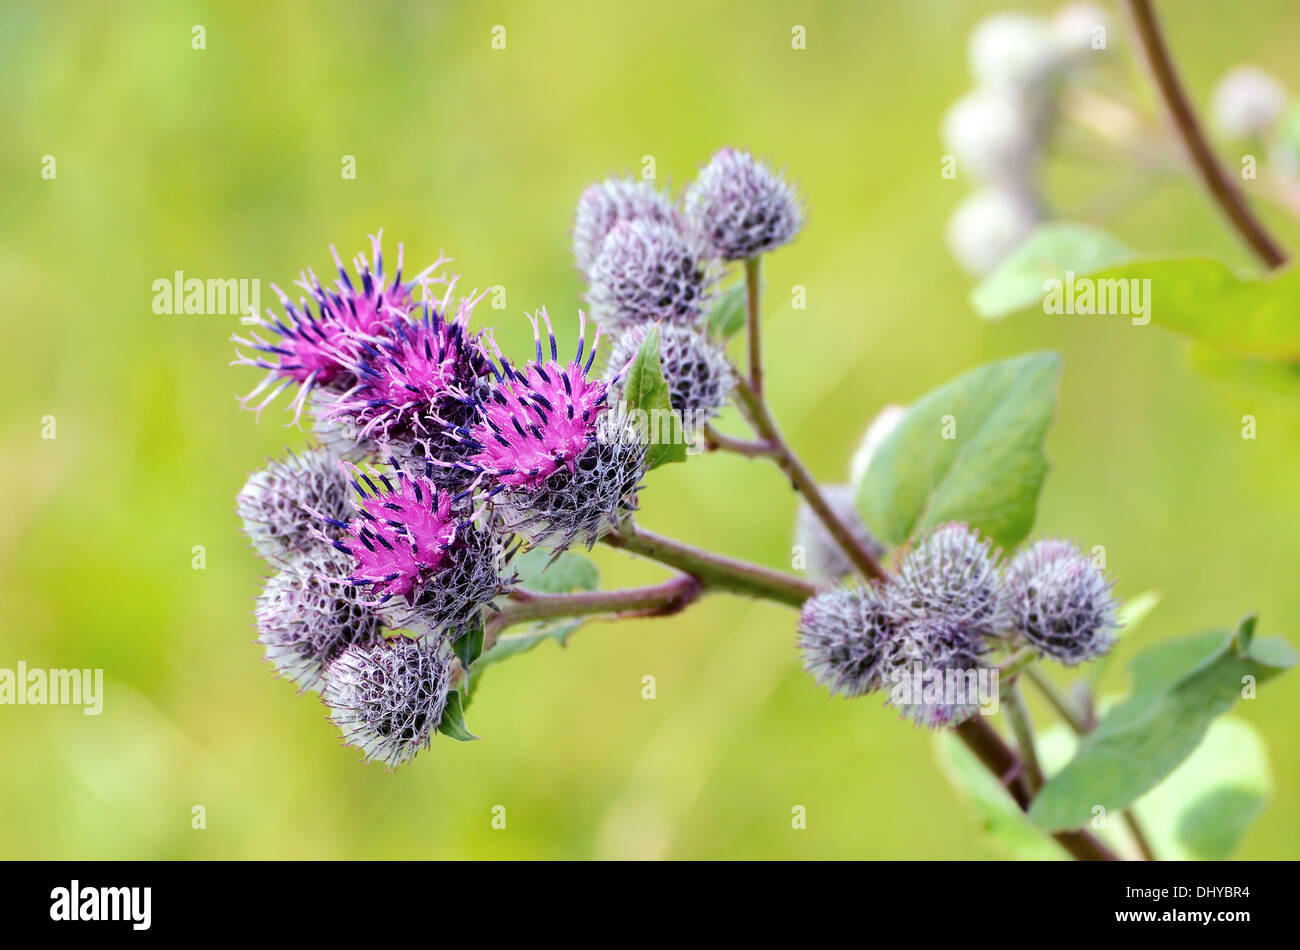 Flowering Great Burdock (Arctium lappa), close up view Stock Photo